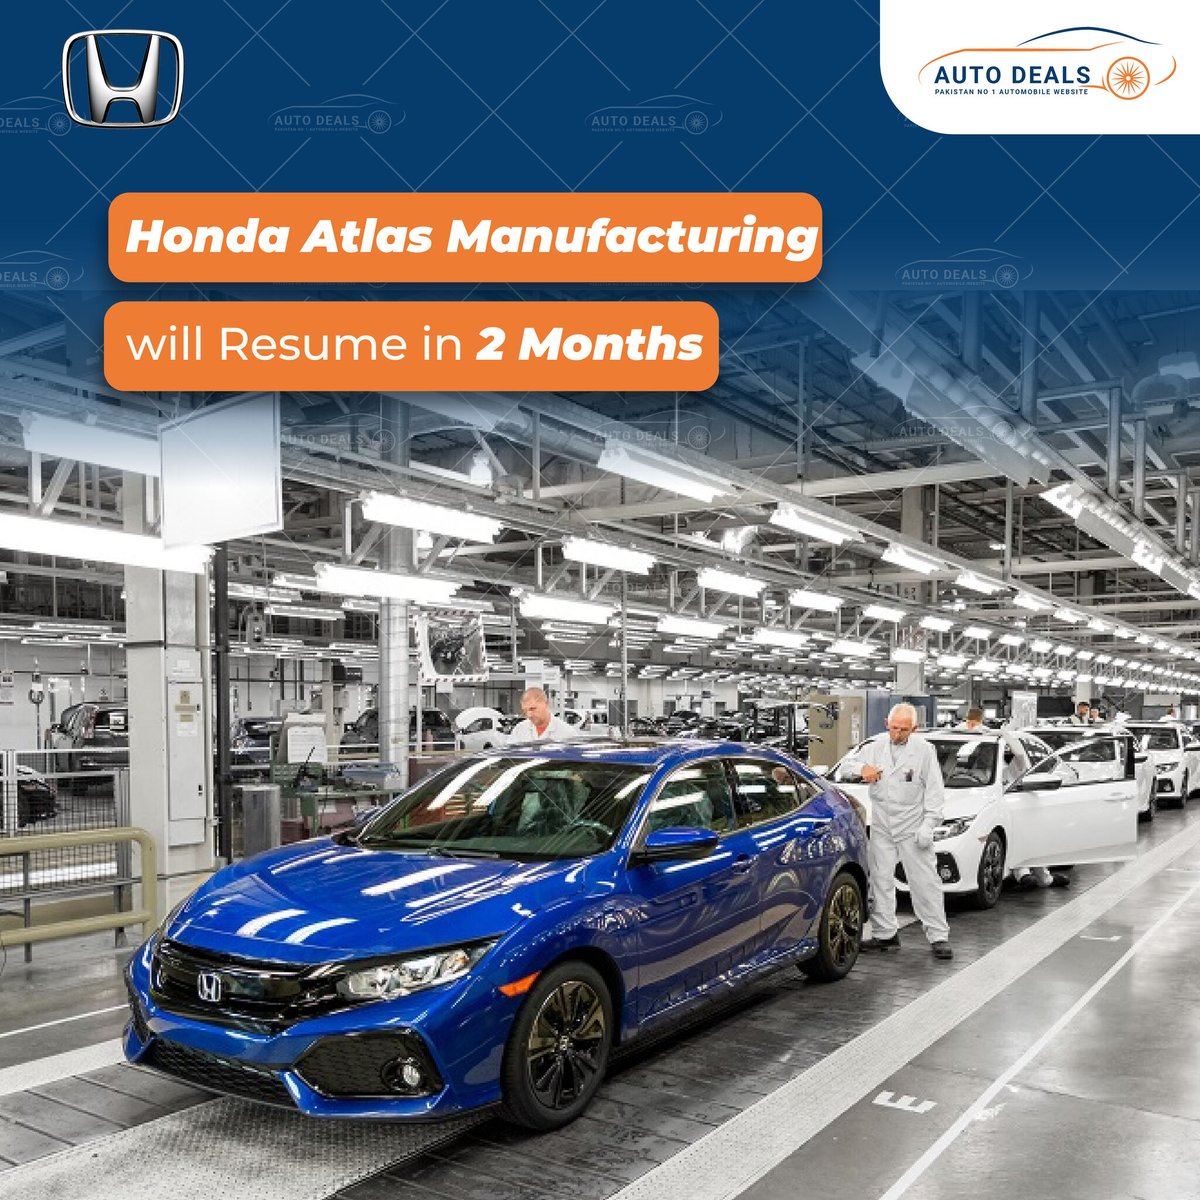 Honda Atlas manufacturing will resume in 2 months.
autodeals.pk
#autodeals #impots #importcar #Car #car2023 #Pakistan #transport